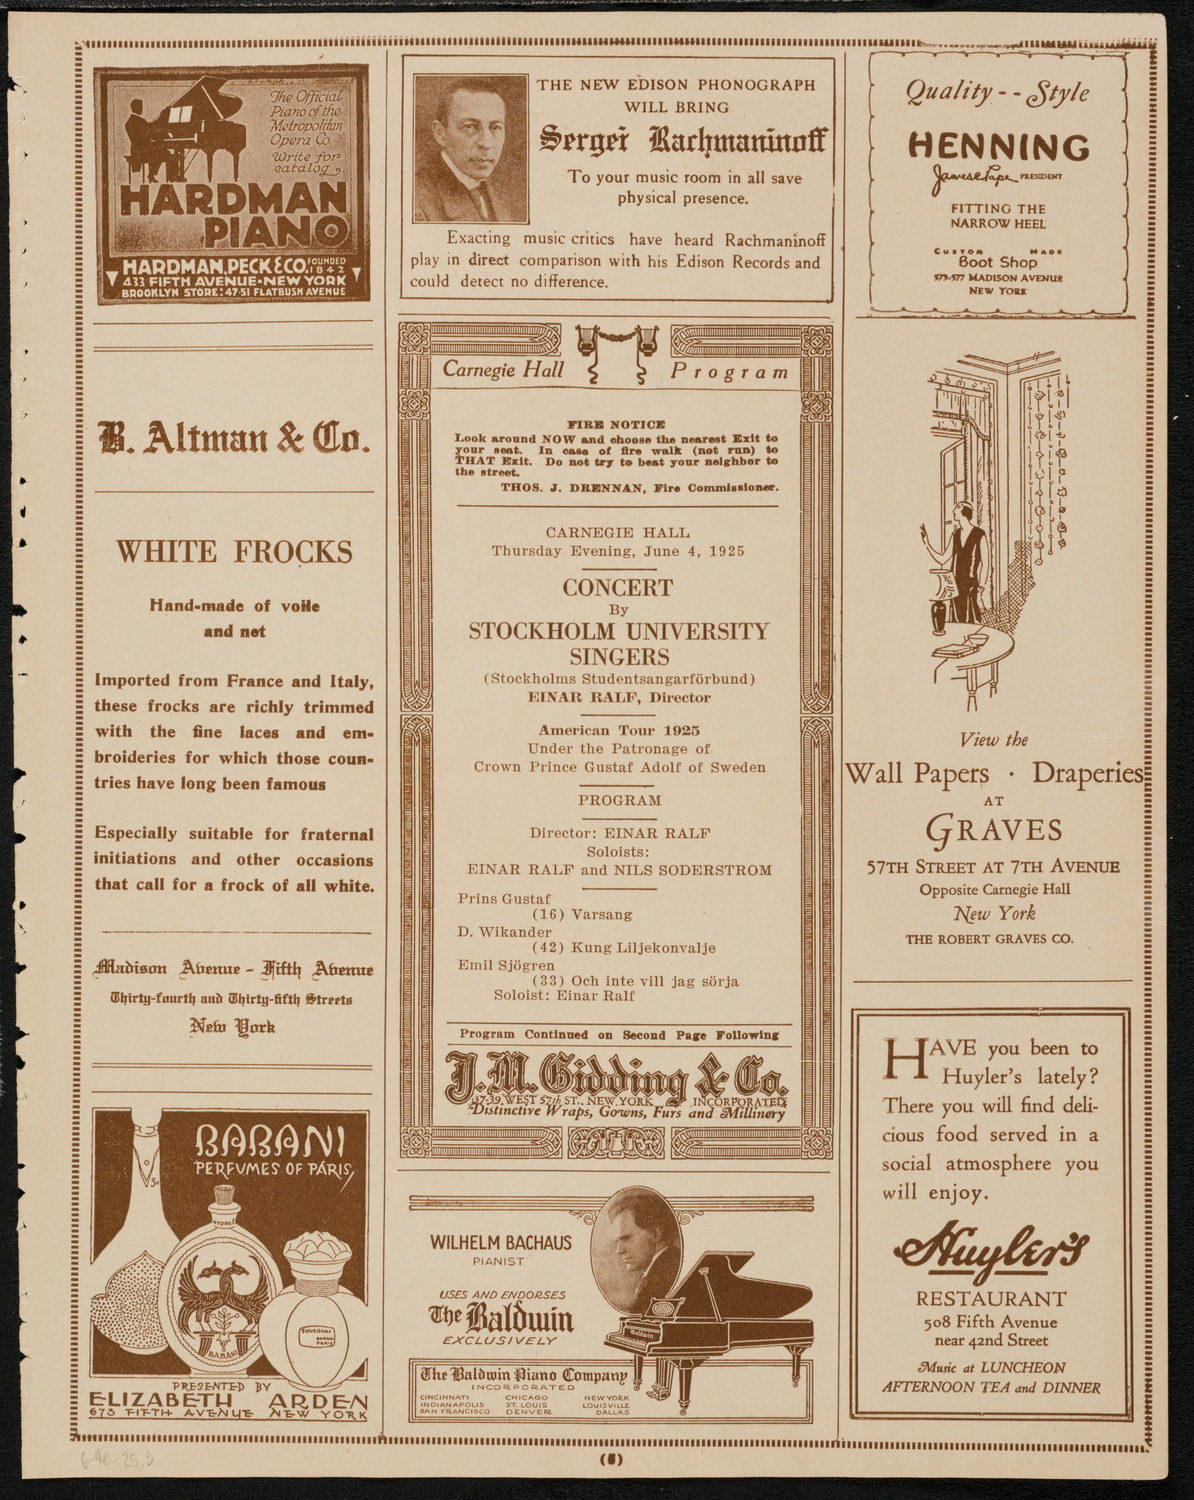 Stockholm University Singers, June 4, 1925, program page 5